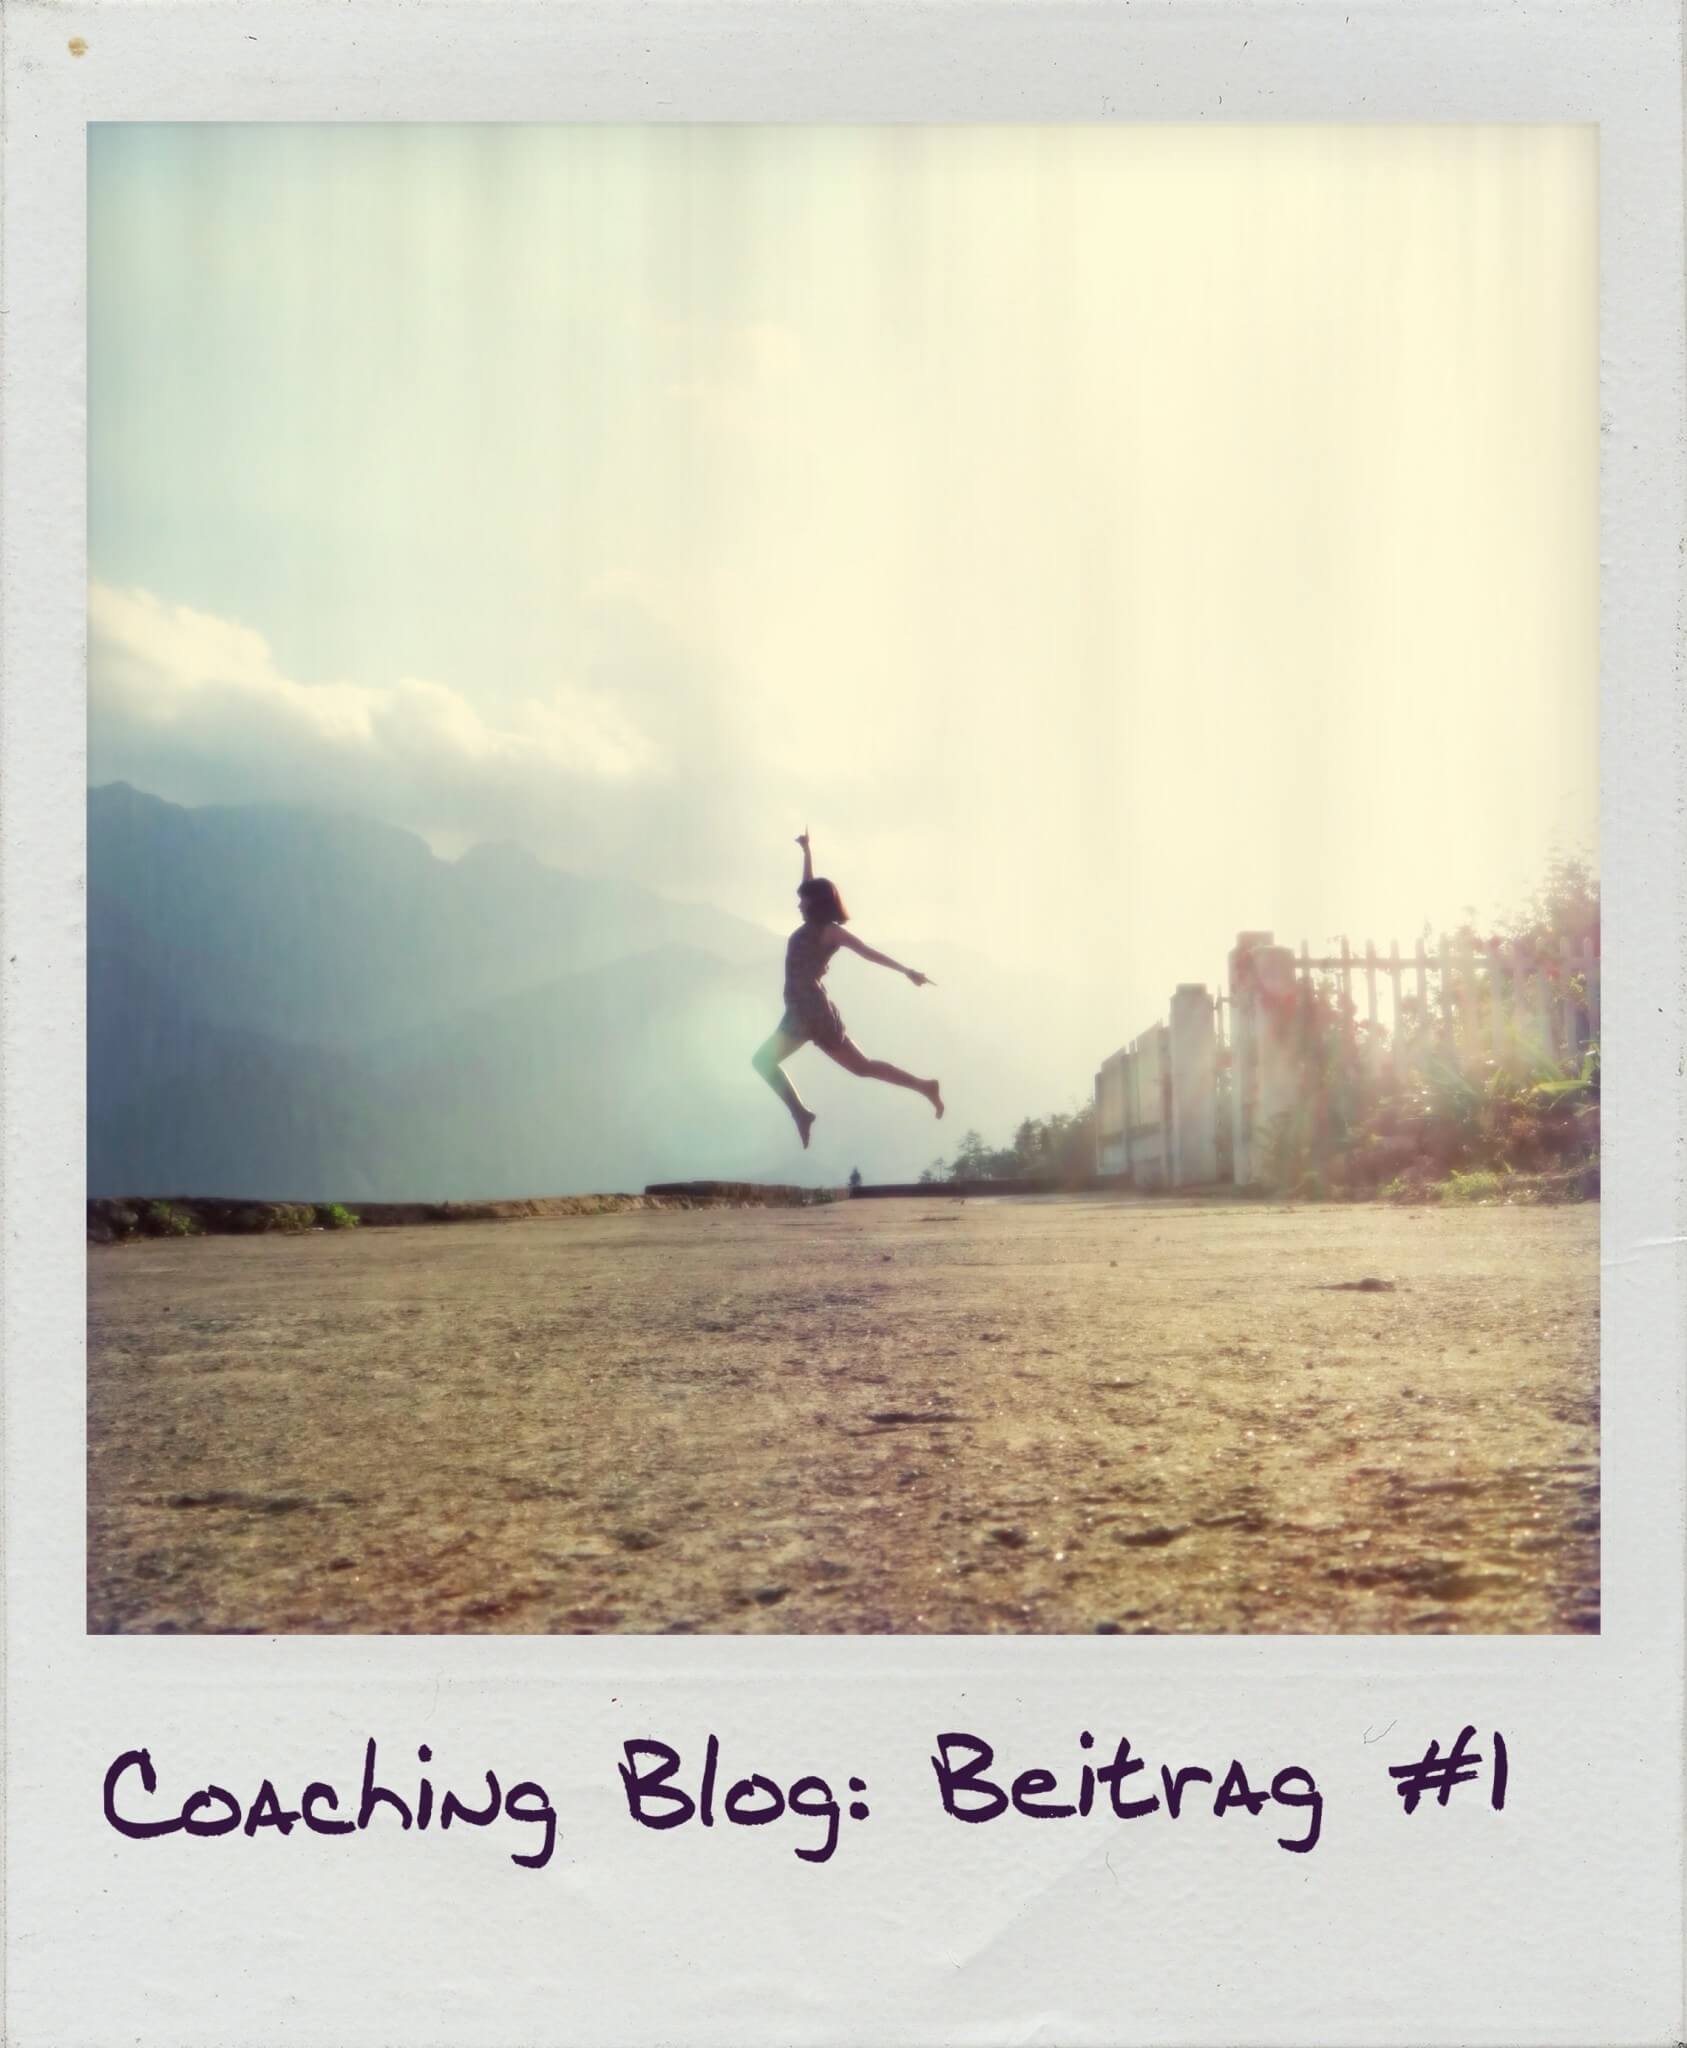 Life Coaching Blog, Laura Seiler Berlin